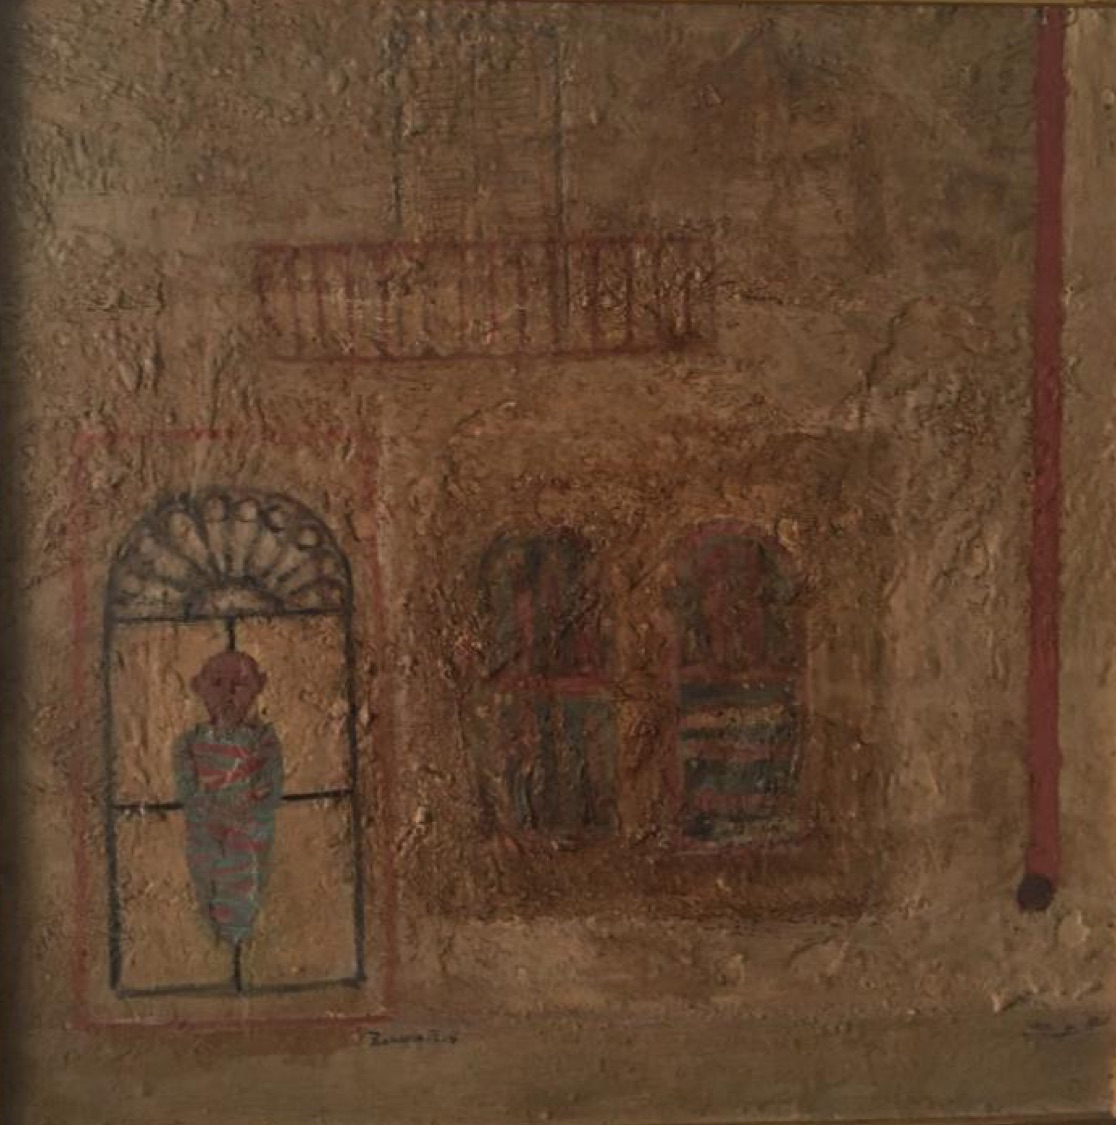 Zakaria El Zeiny (1932-1993). Untitled, 1981. Oil on board 60 x 60 cm AMA-196